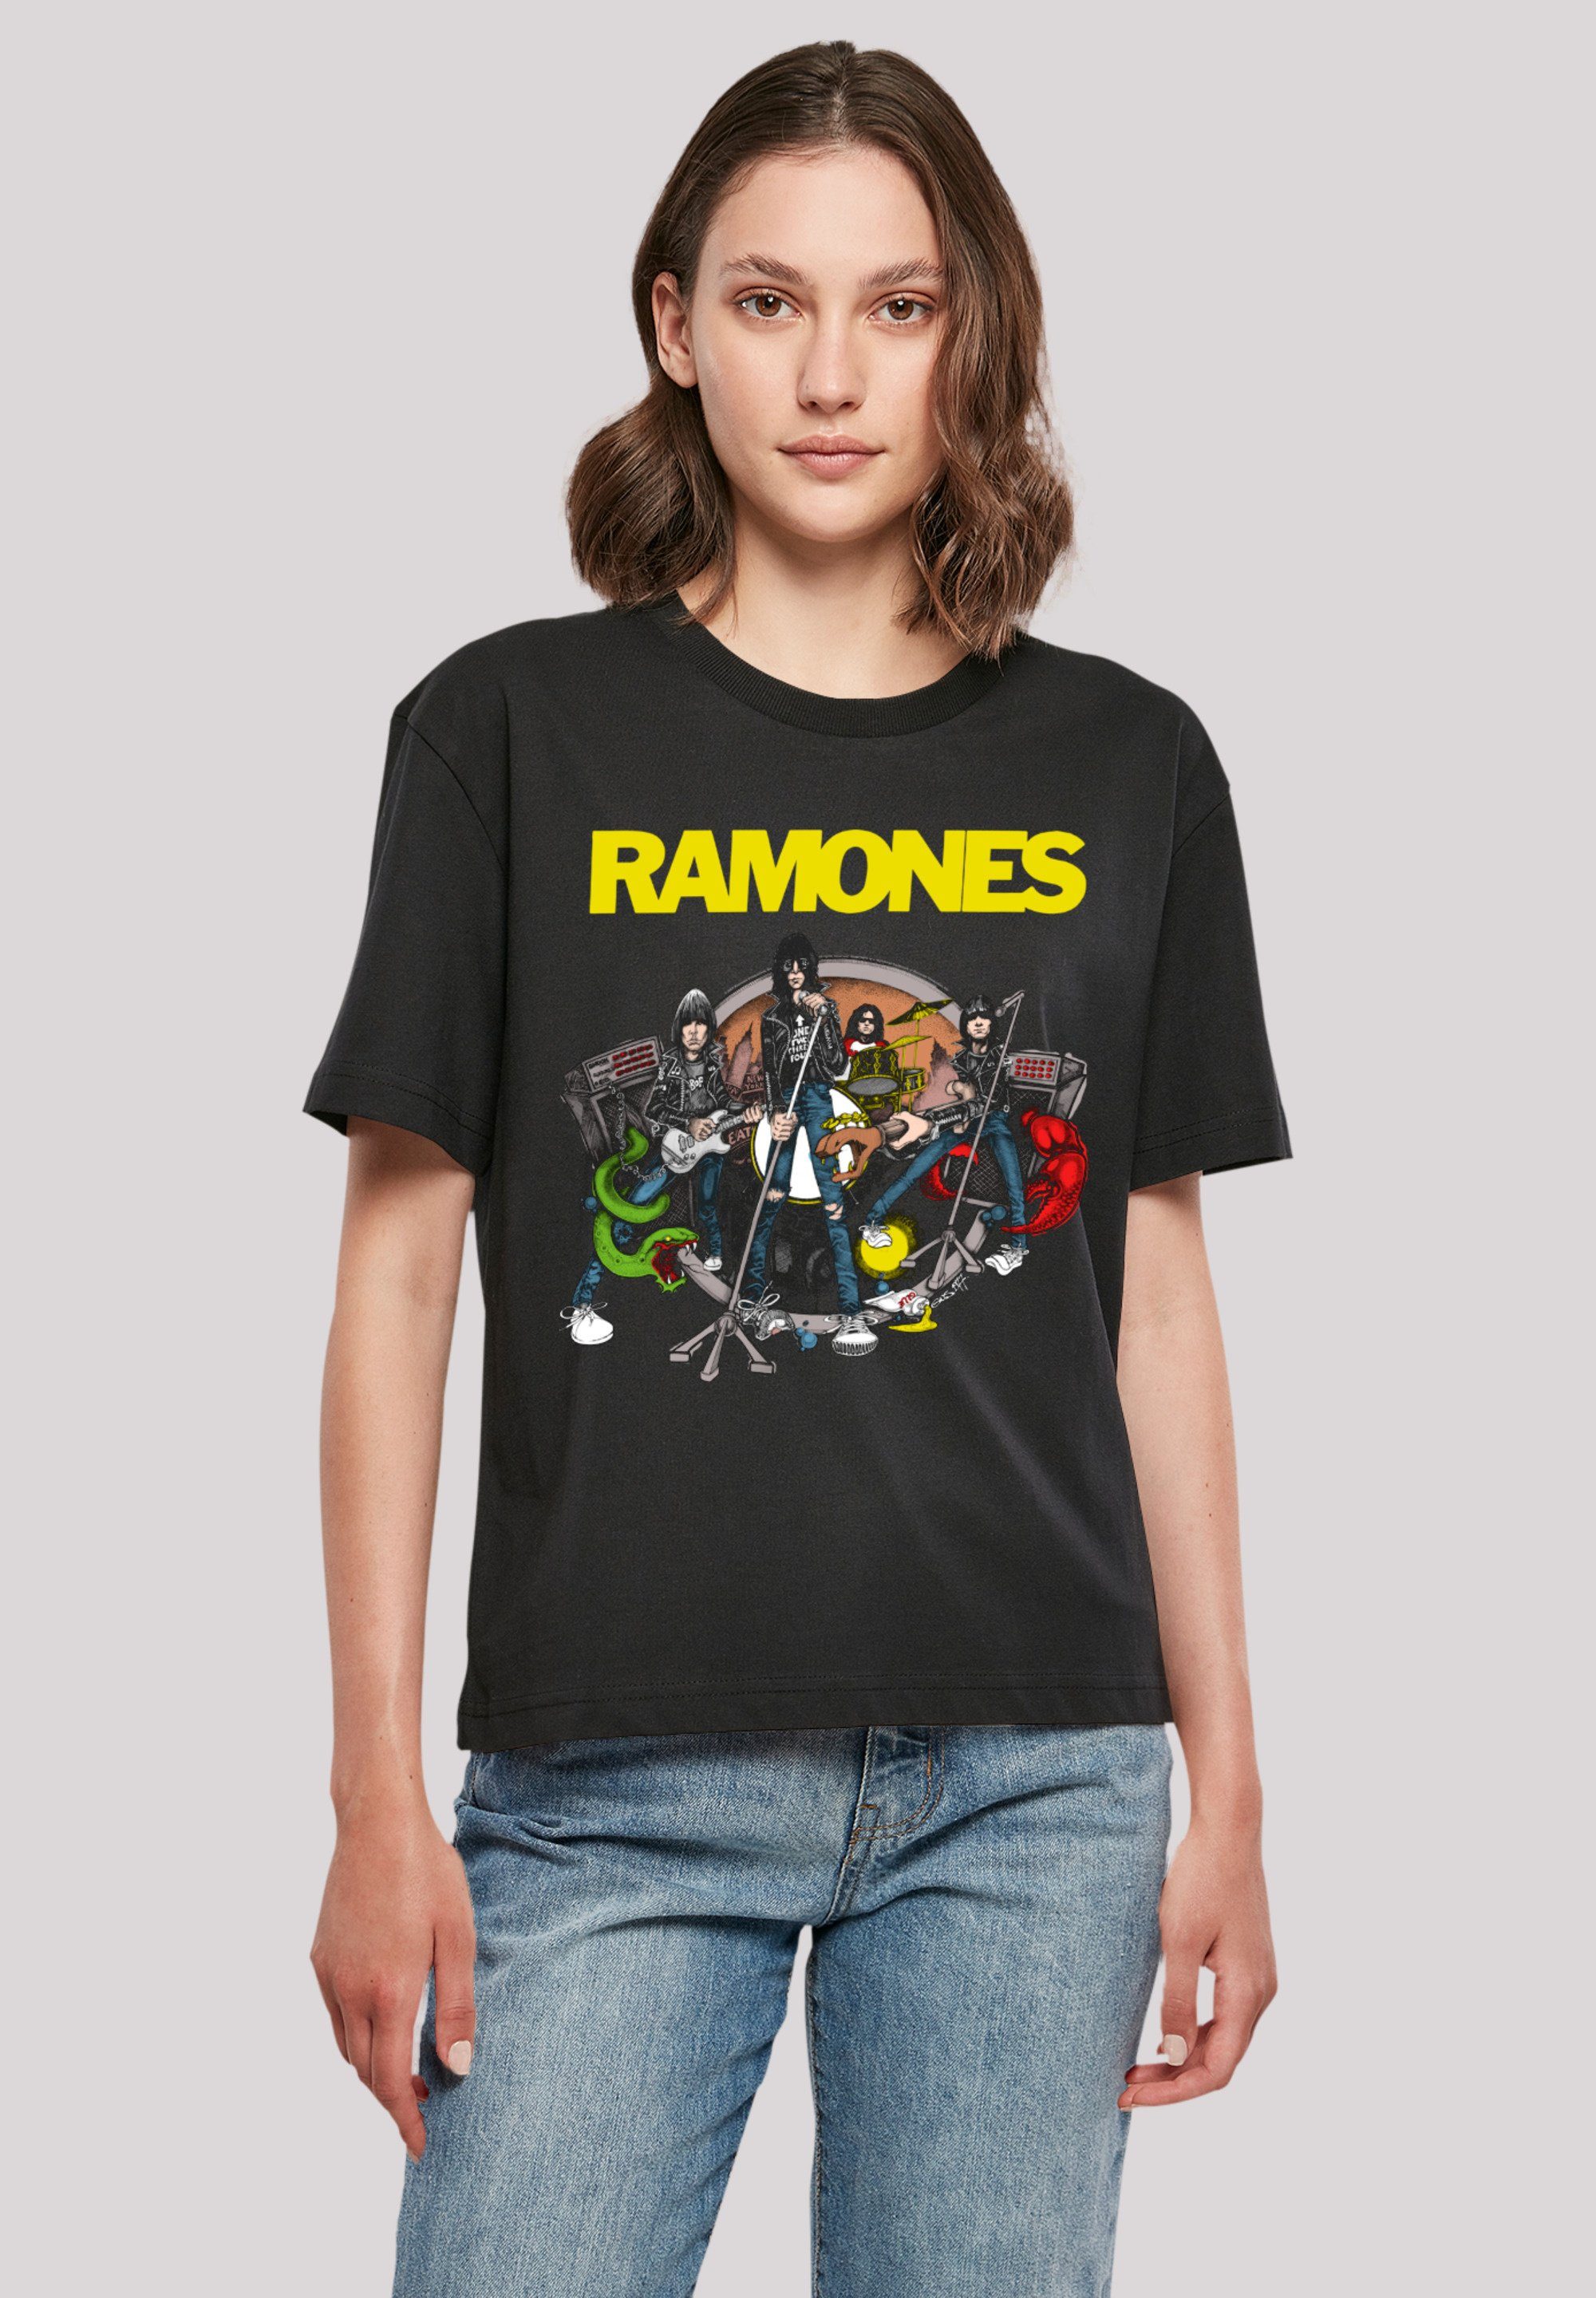 Band Ramones Rock Road T-Shirt Band, Premium To Musik F4NT4STIC Rock-Musik Qualität, Ruin